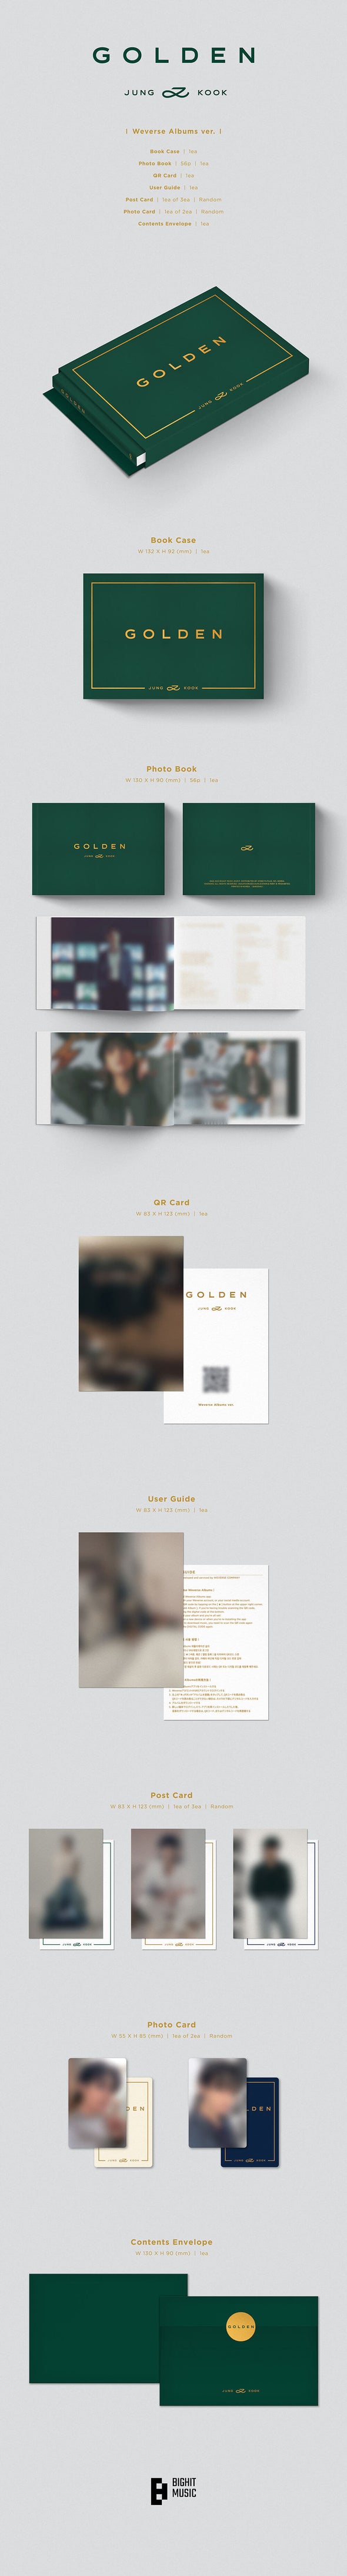 JUNGKOOK (BTS) - GOLDEN Album (Weverse Mini)